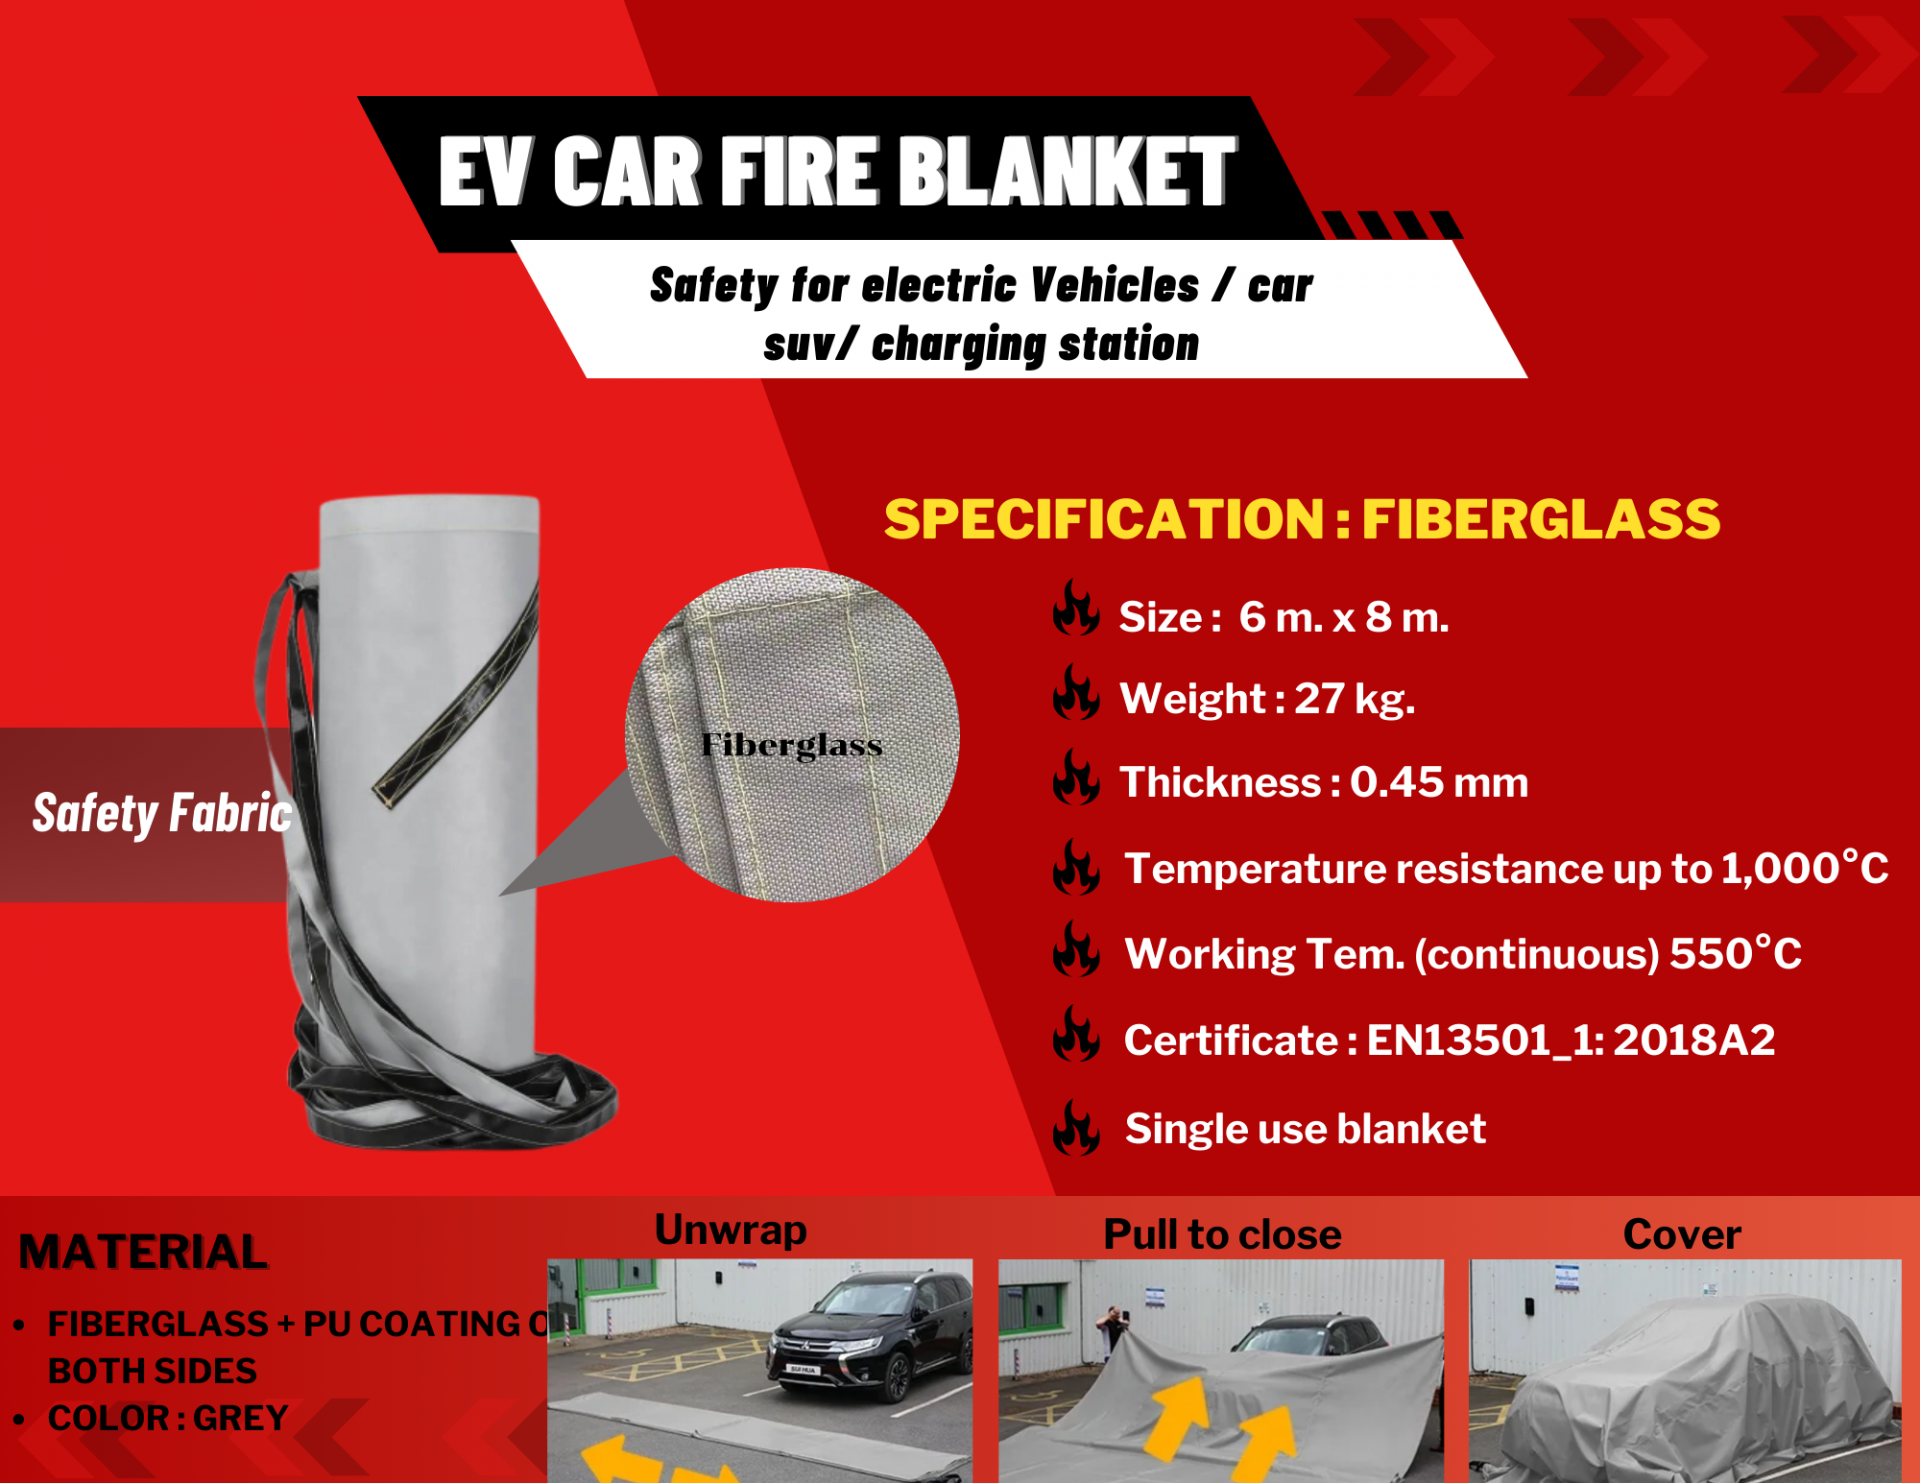 Fiberglass EV Fire Blanket